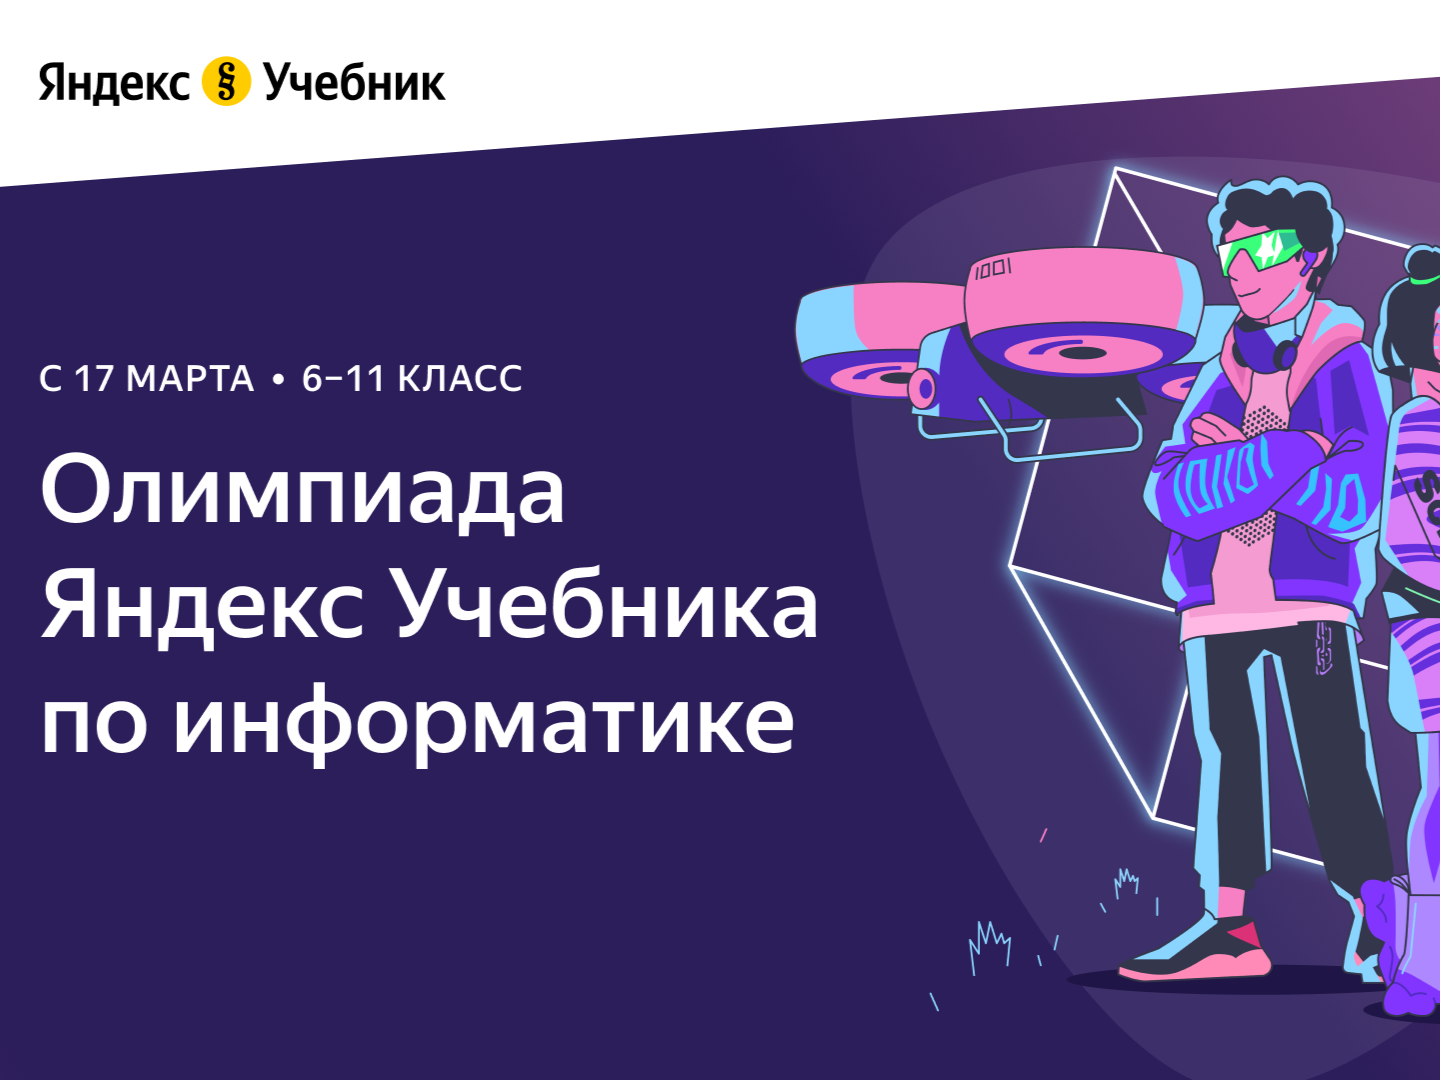 Приглашаем на олимпиаду по информатике от Яндекс Учебника